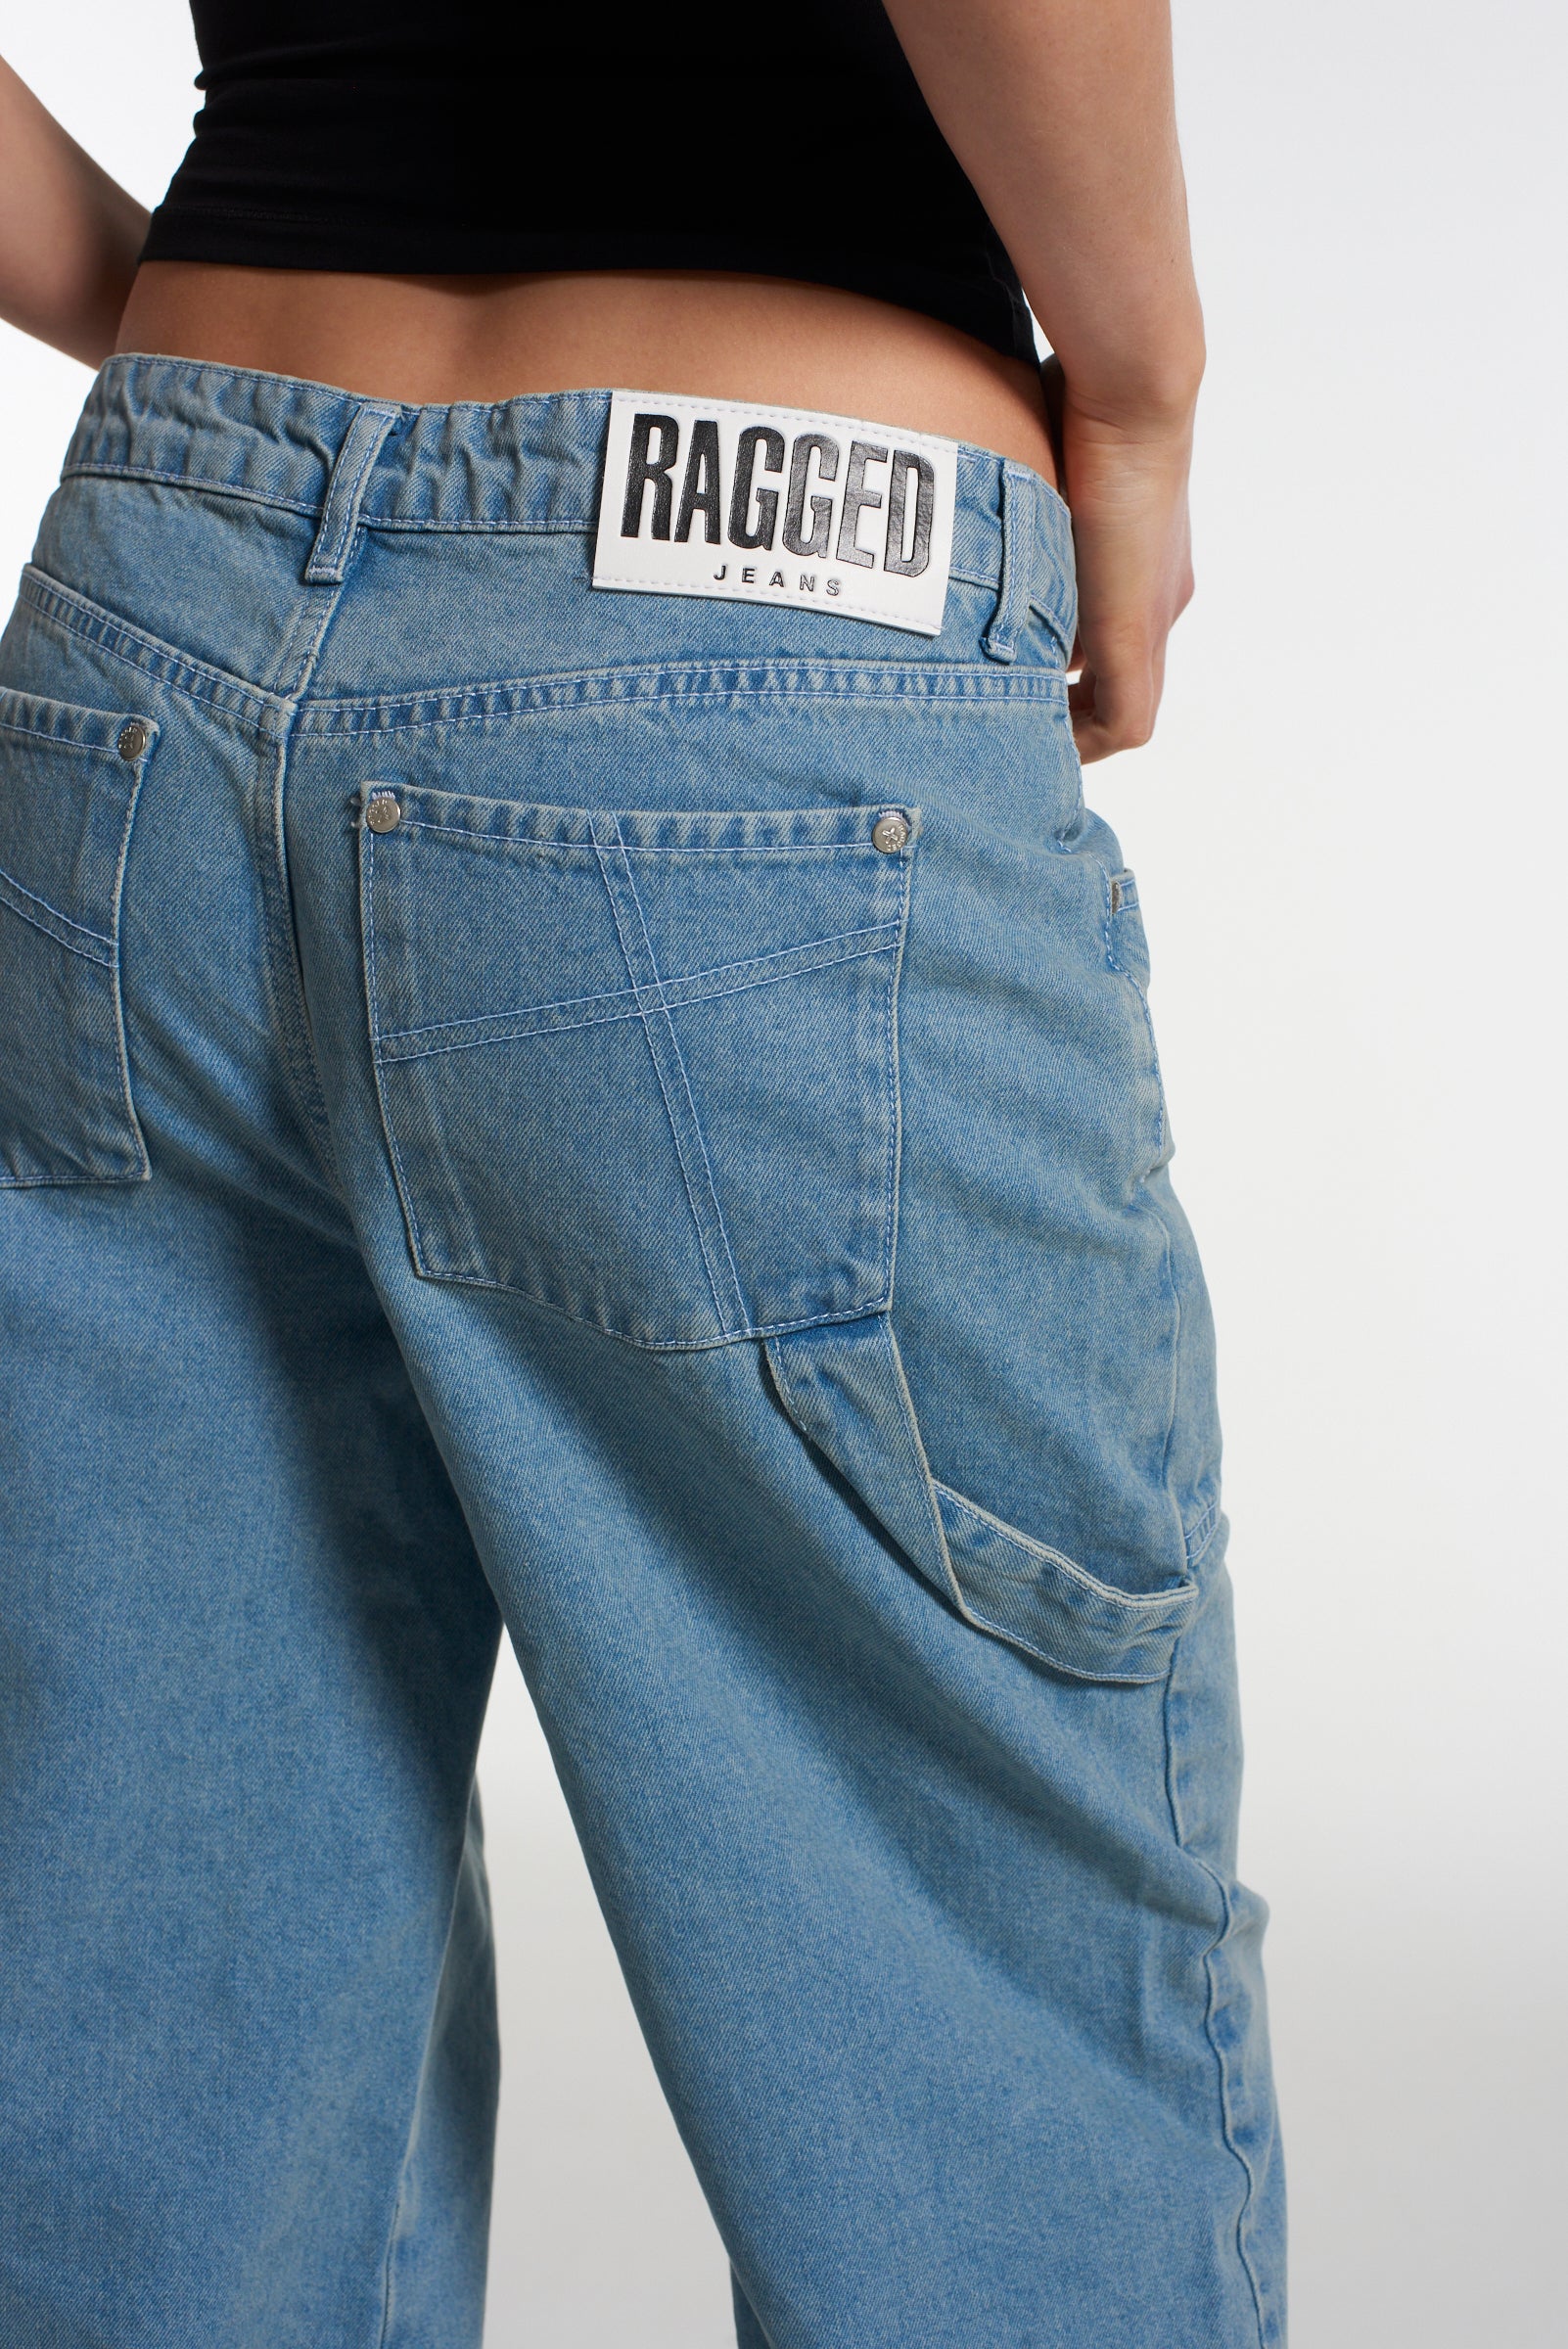 The Ragged Preist Mesh Patch Blue Denim Skinny Jeans Women's Size 26 -  beyond exchange